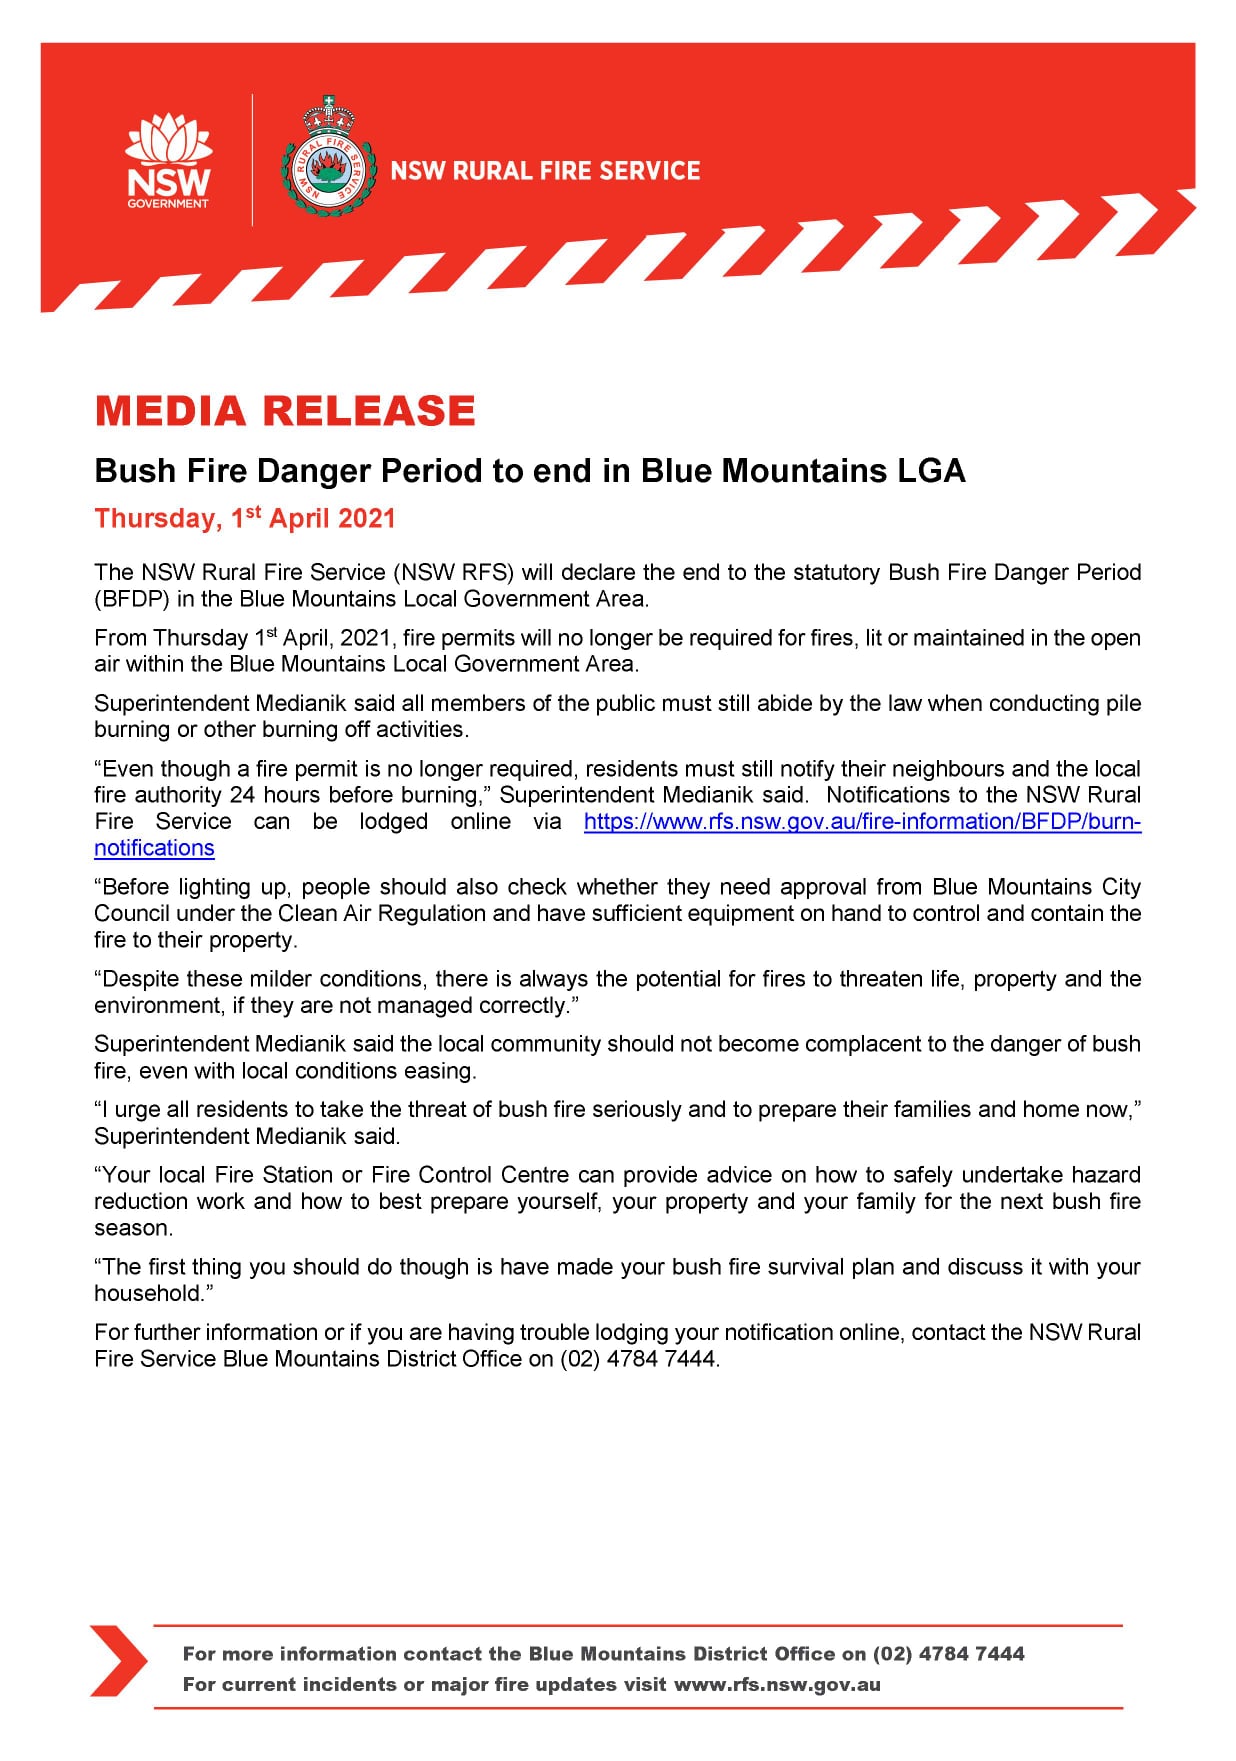 Blue Mountains Bushfire danger period